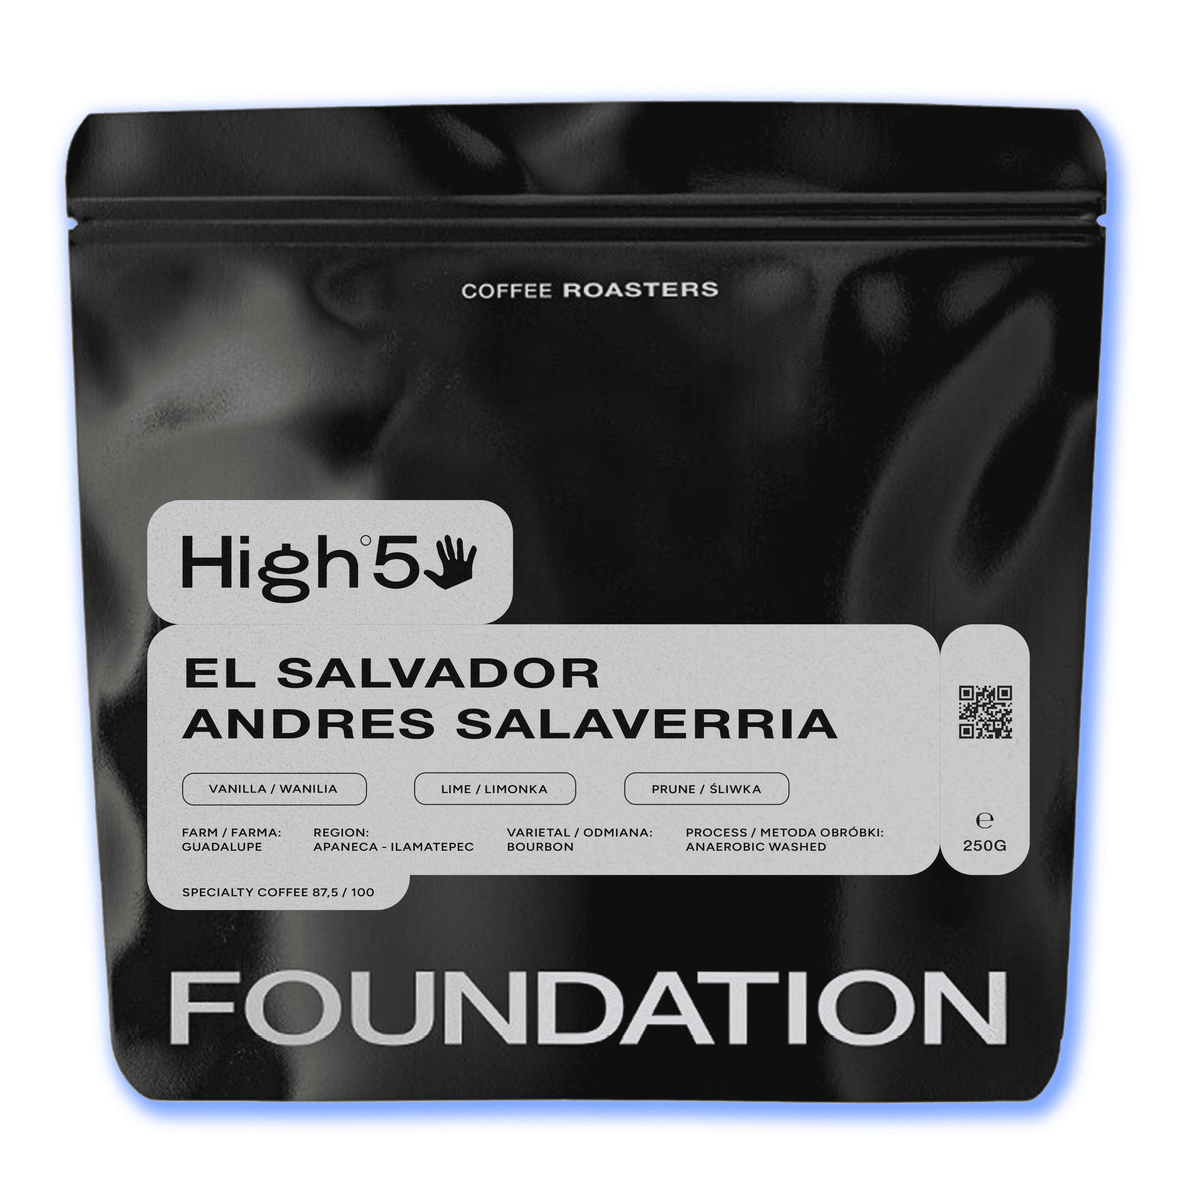 El Salvador Andres Salaverria (espresso) 250 g